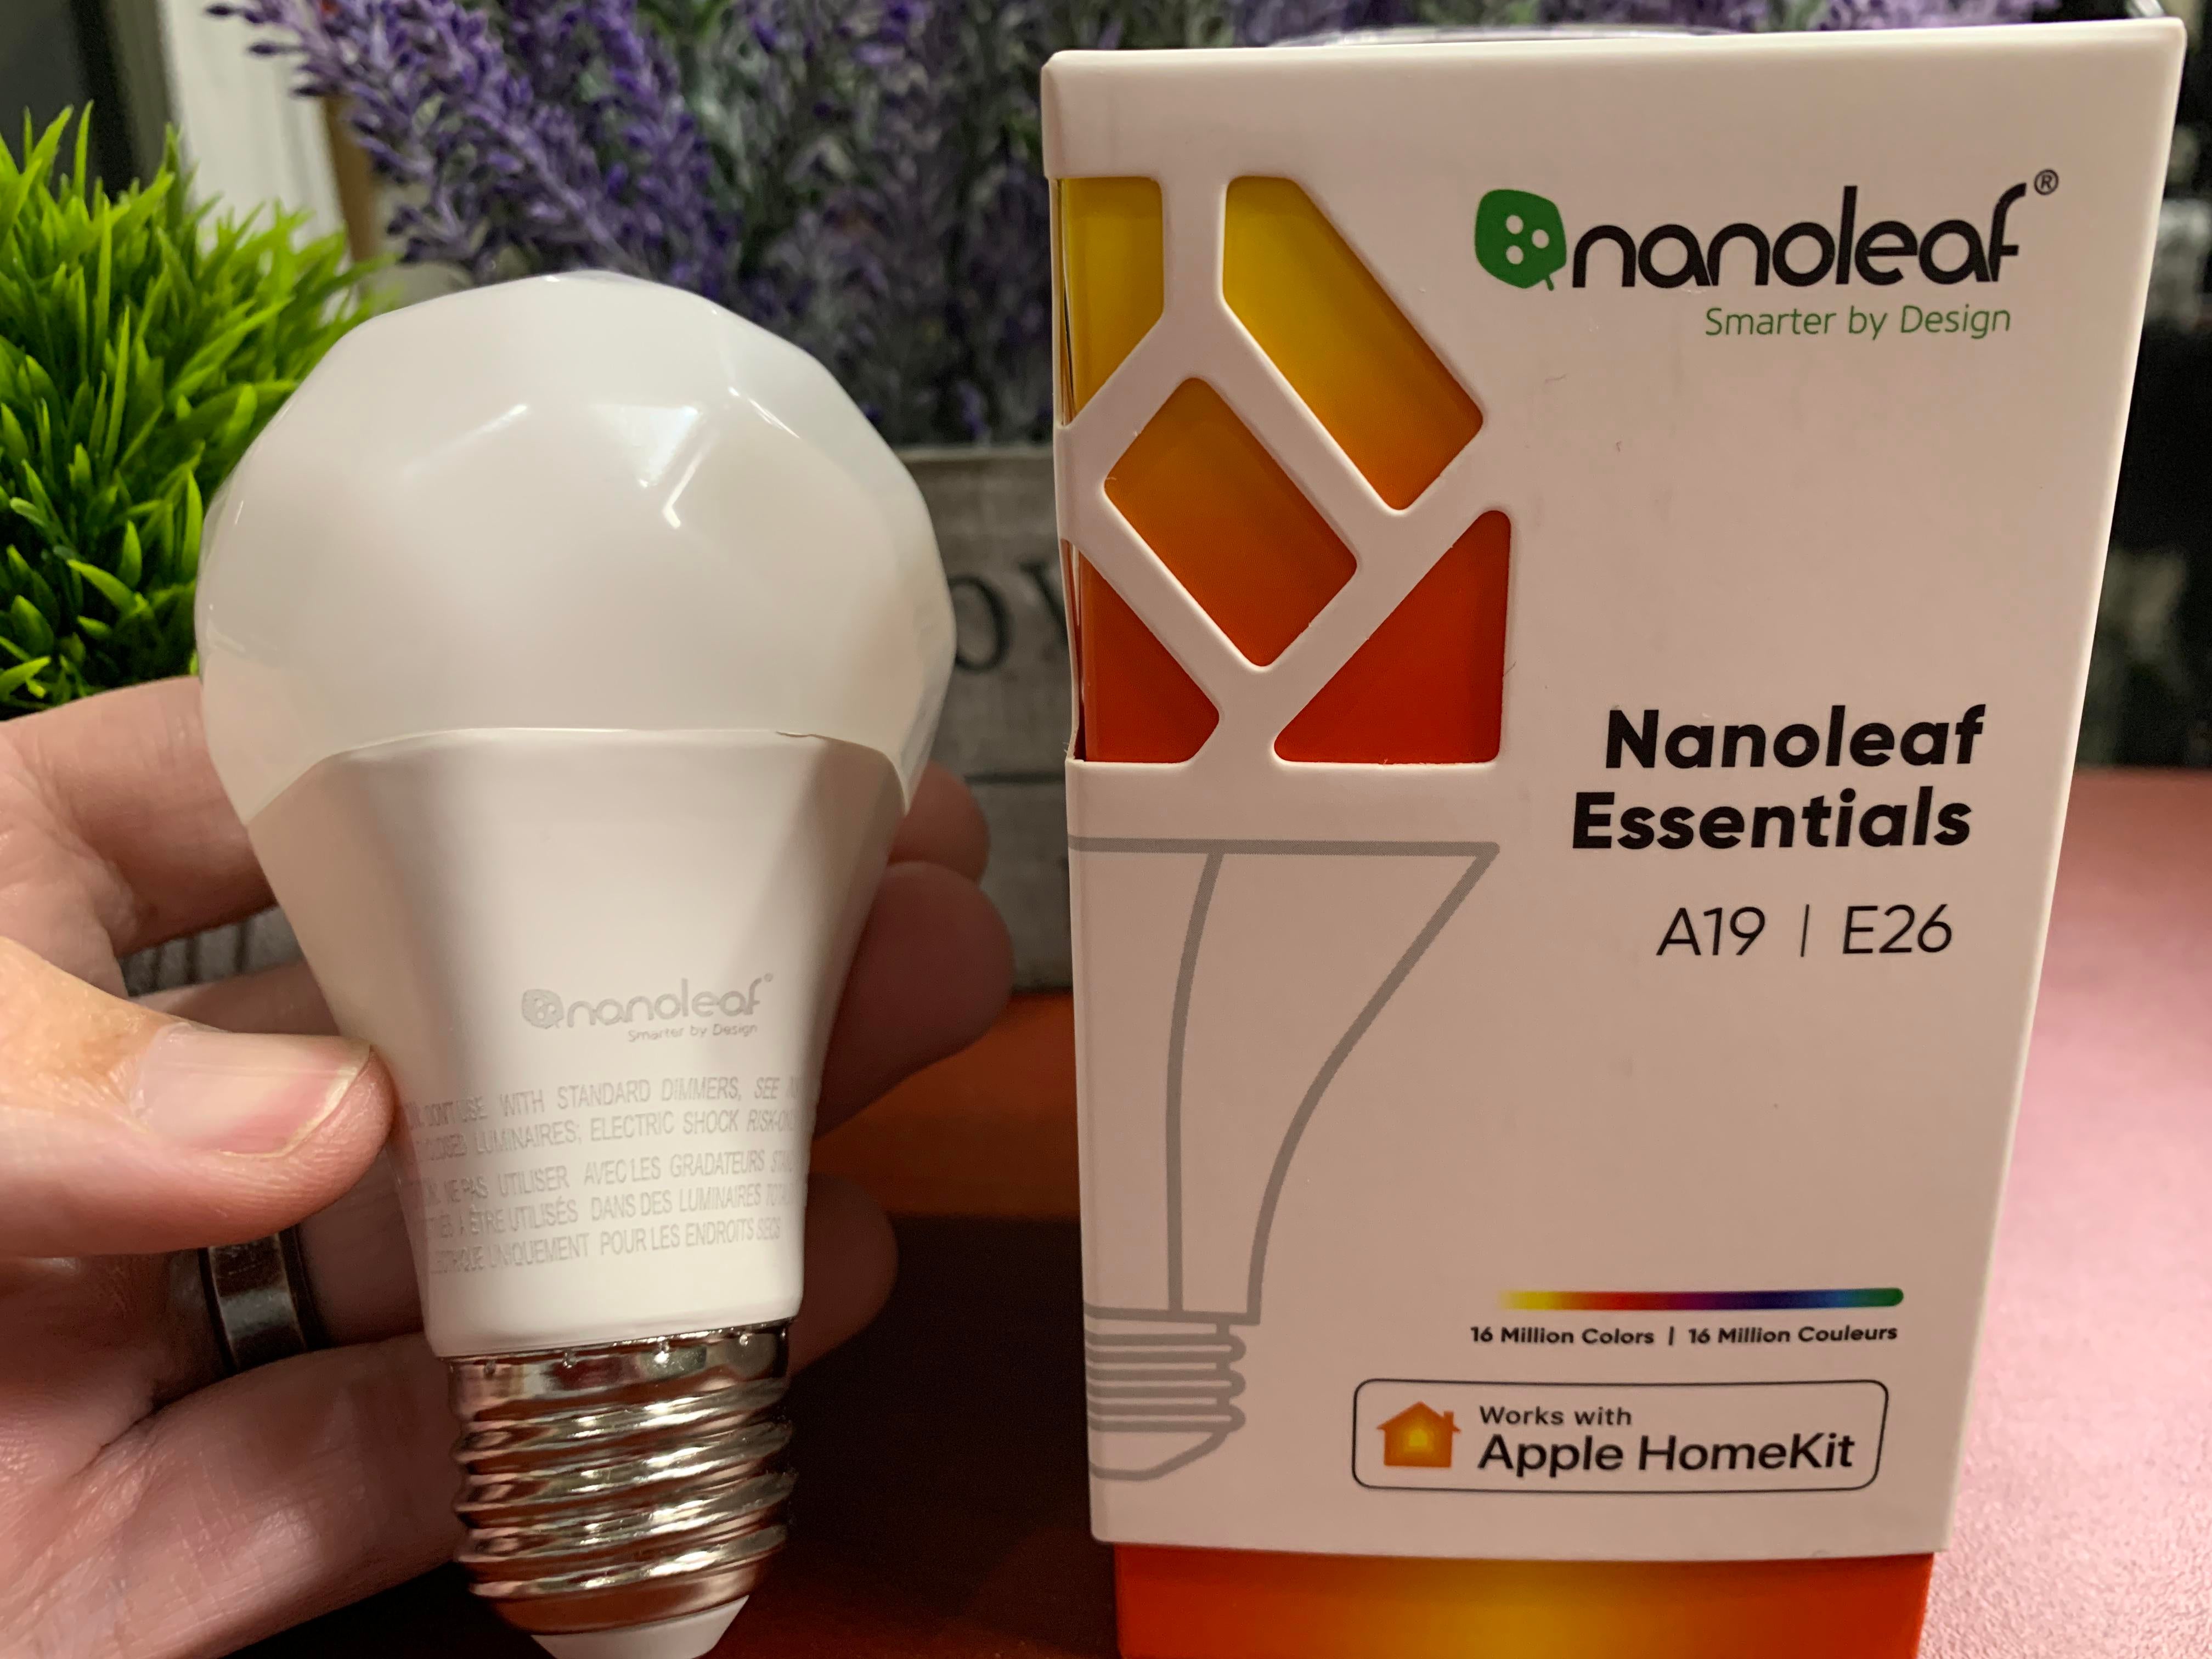 Nanoleaf Essentials LightBulb works with HomeKit via Bluetooth and THREAD